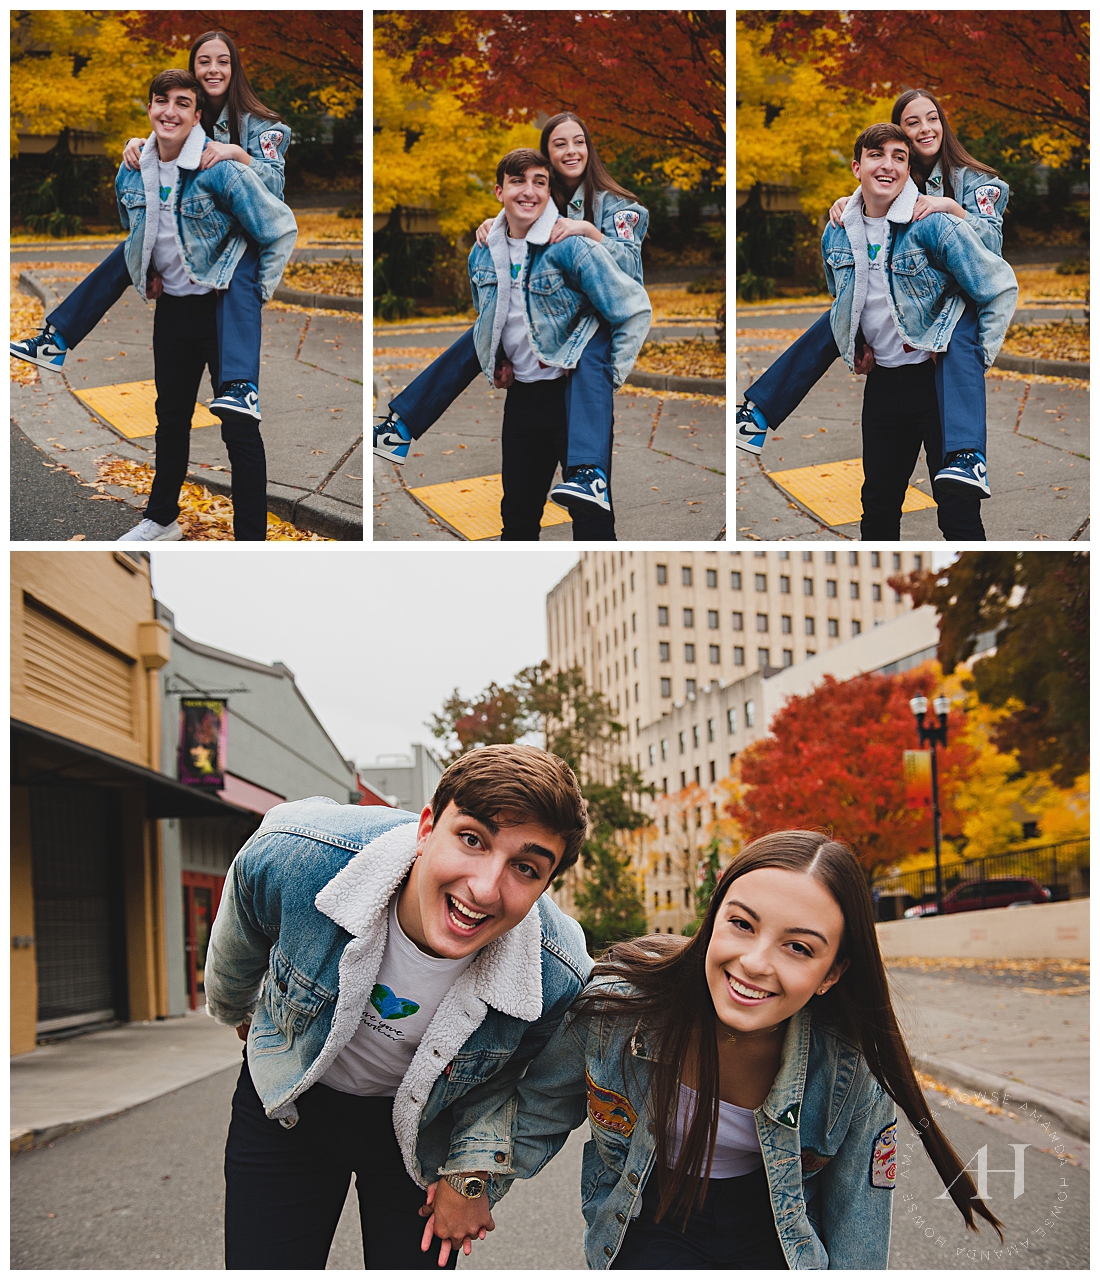 Twin Senior Portrait Ideas with Cute Matching Denim Jackets | Senior Style Guide 2022 | Photographed by the Best Tacoma, Washington Senior Photographer Amanda Howse Photography